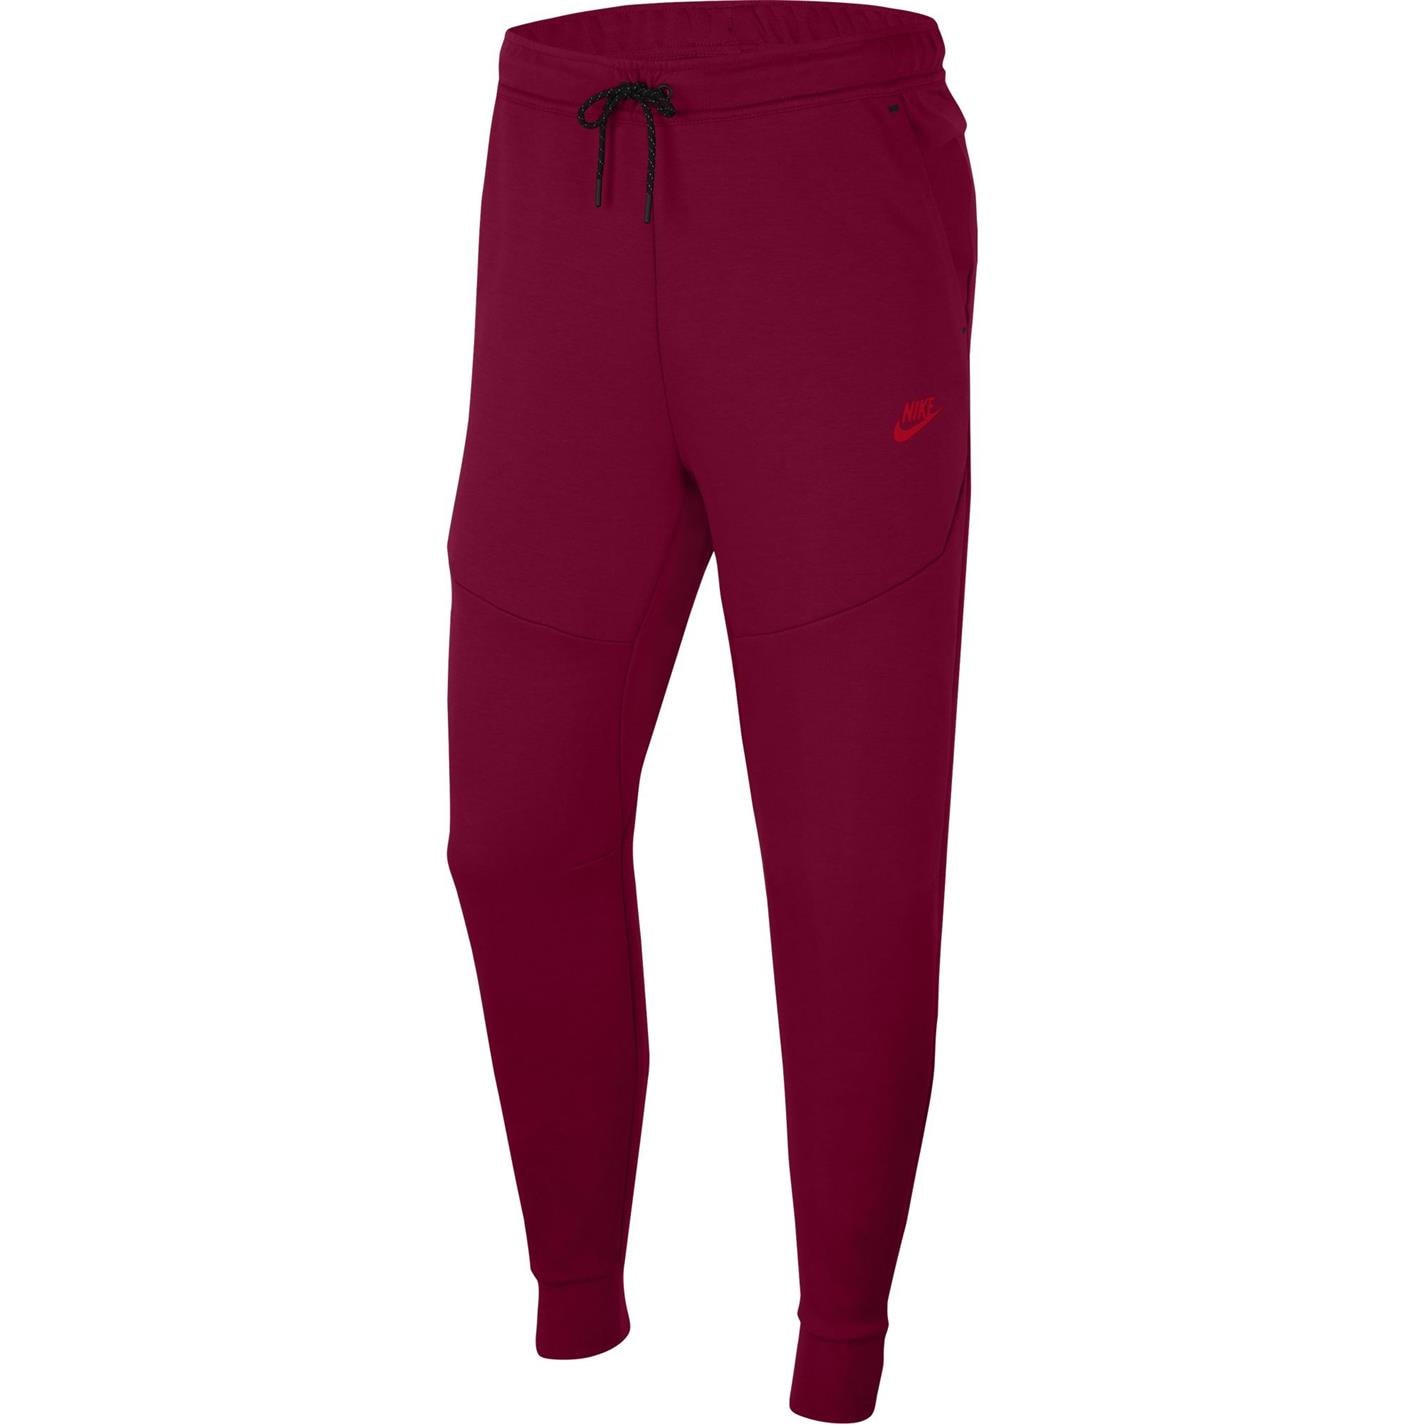 Pantaloni jogging Nike Tech pentru Barbati team rosu